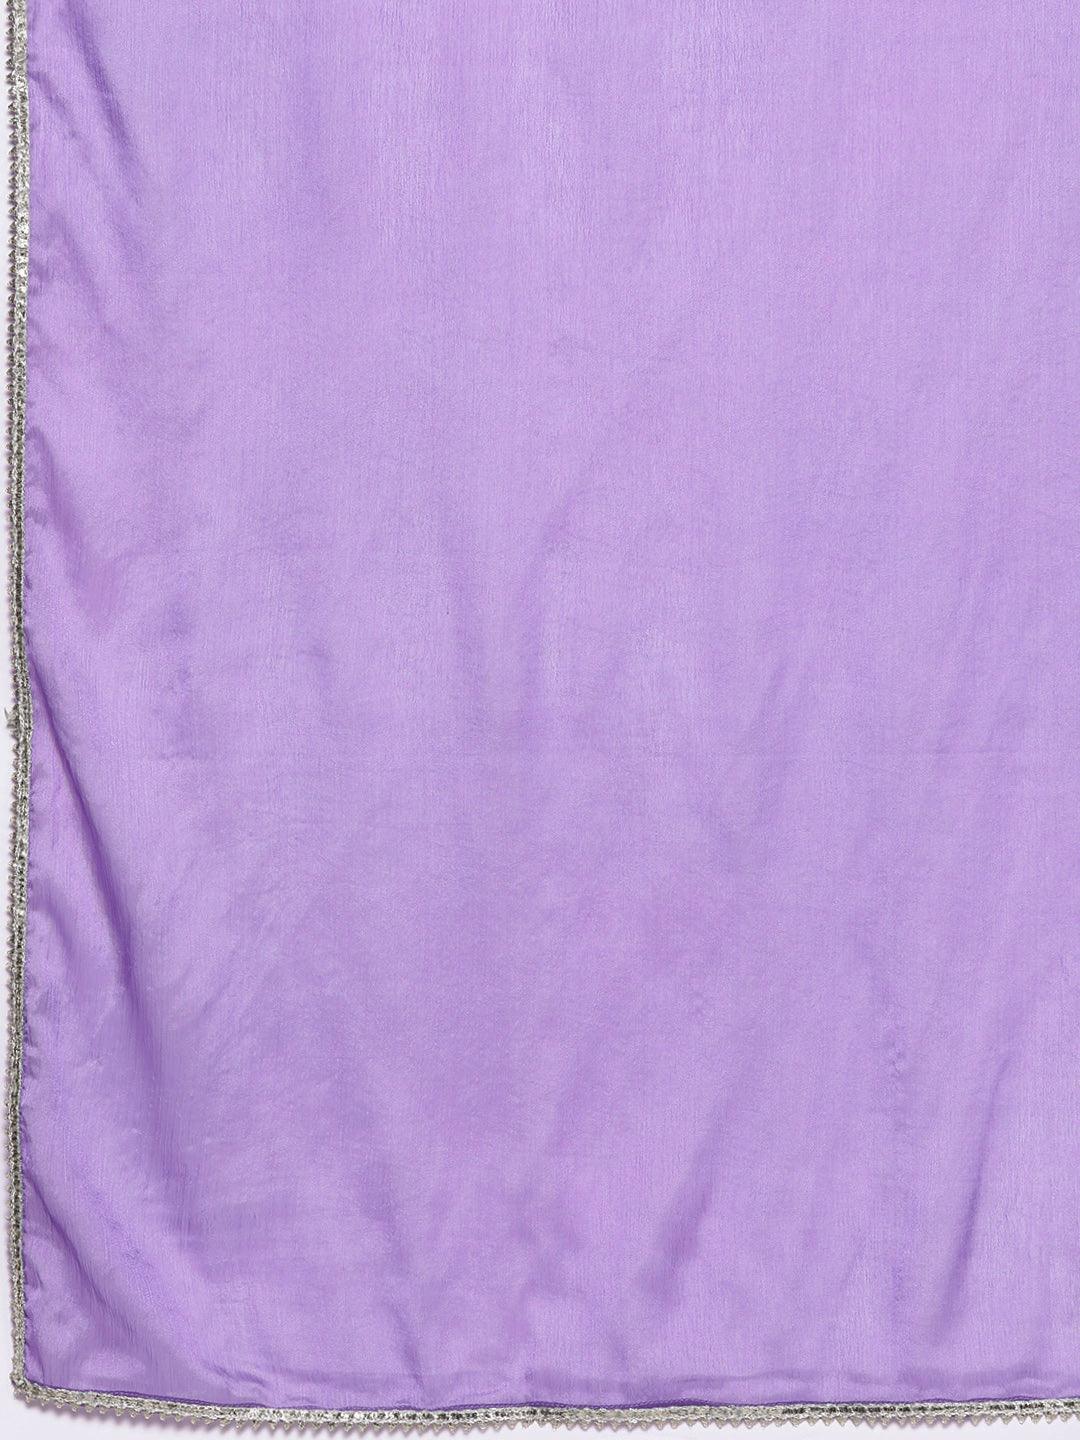 Lavender Yoke Design Silk Blend Straight Kurta With Palazzos & Dupatta - Libas